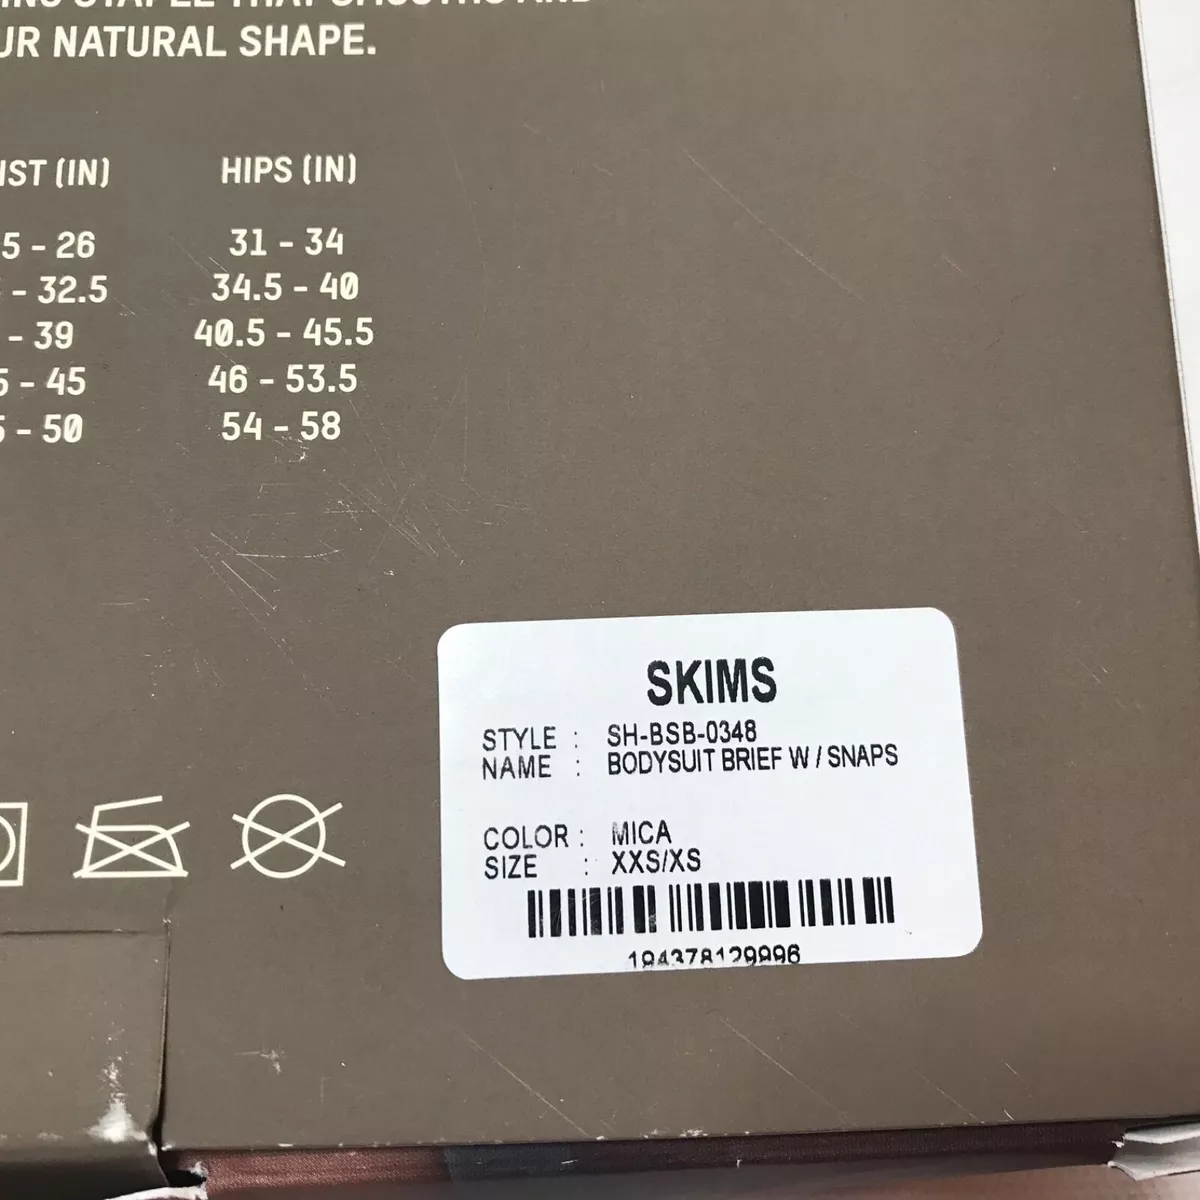 Skims Original Sculpting Bodysuit Brief With Snaps Umber Size 4X